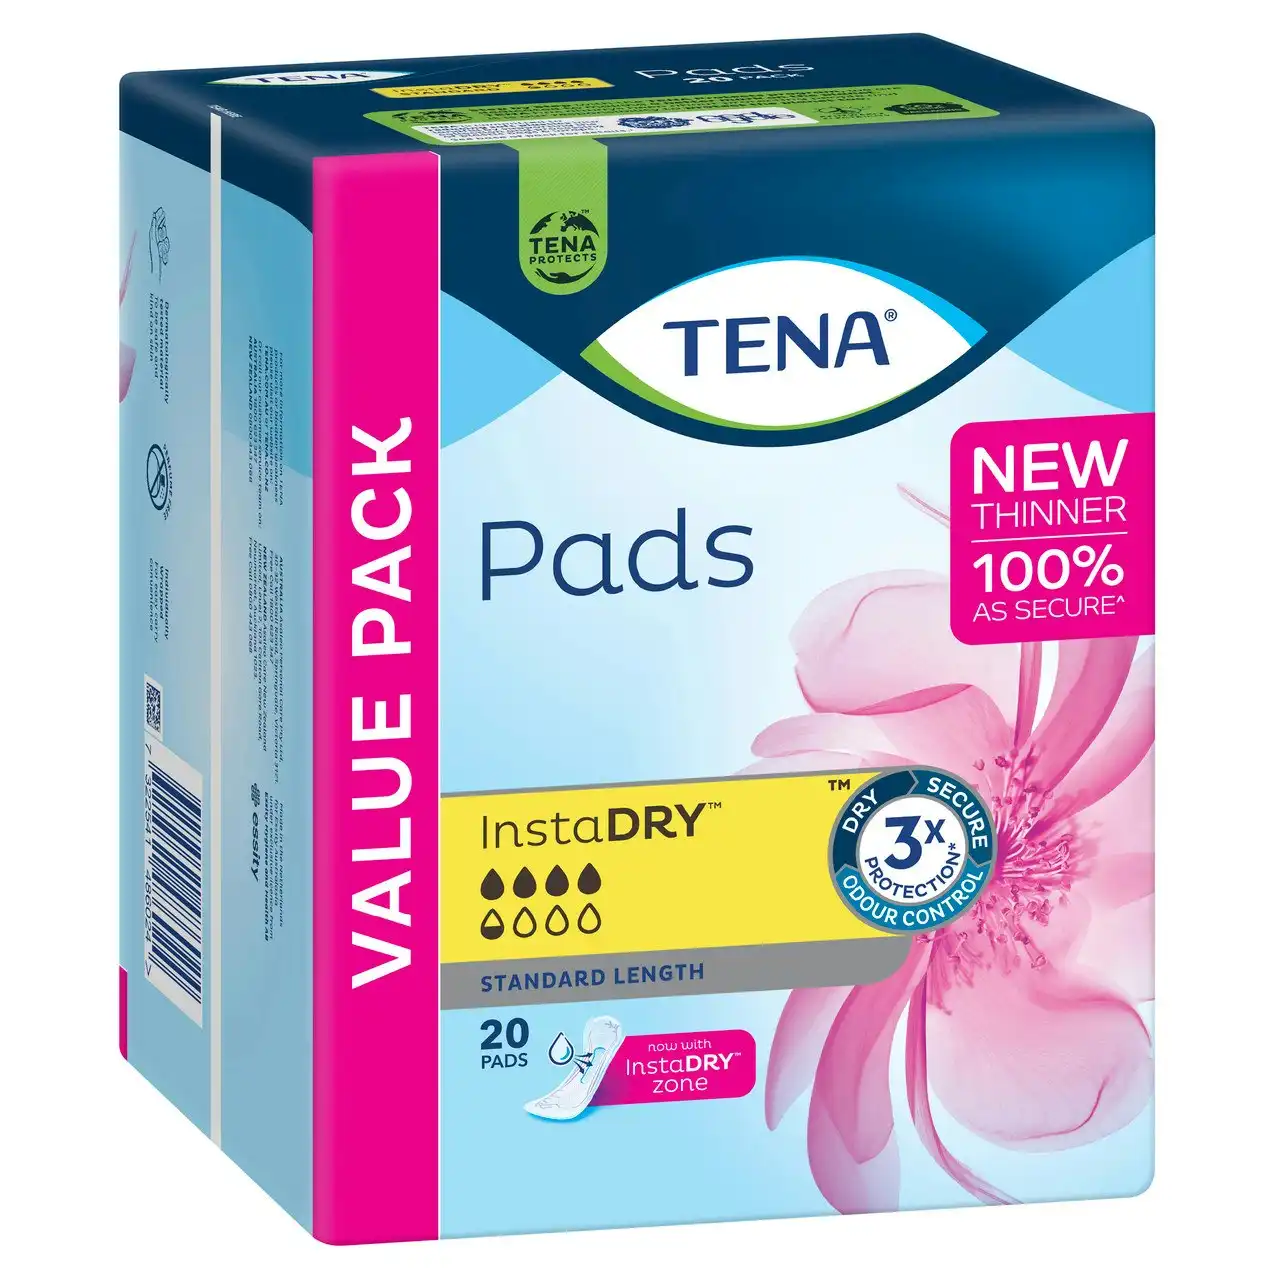 TENA Pads InstaDRY Standard Length 20 pack